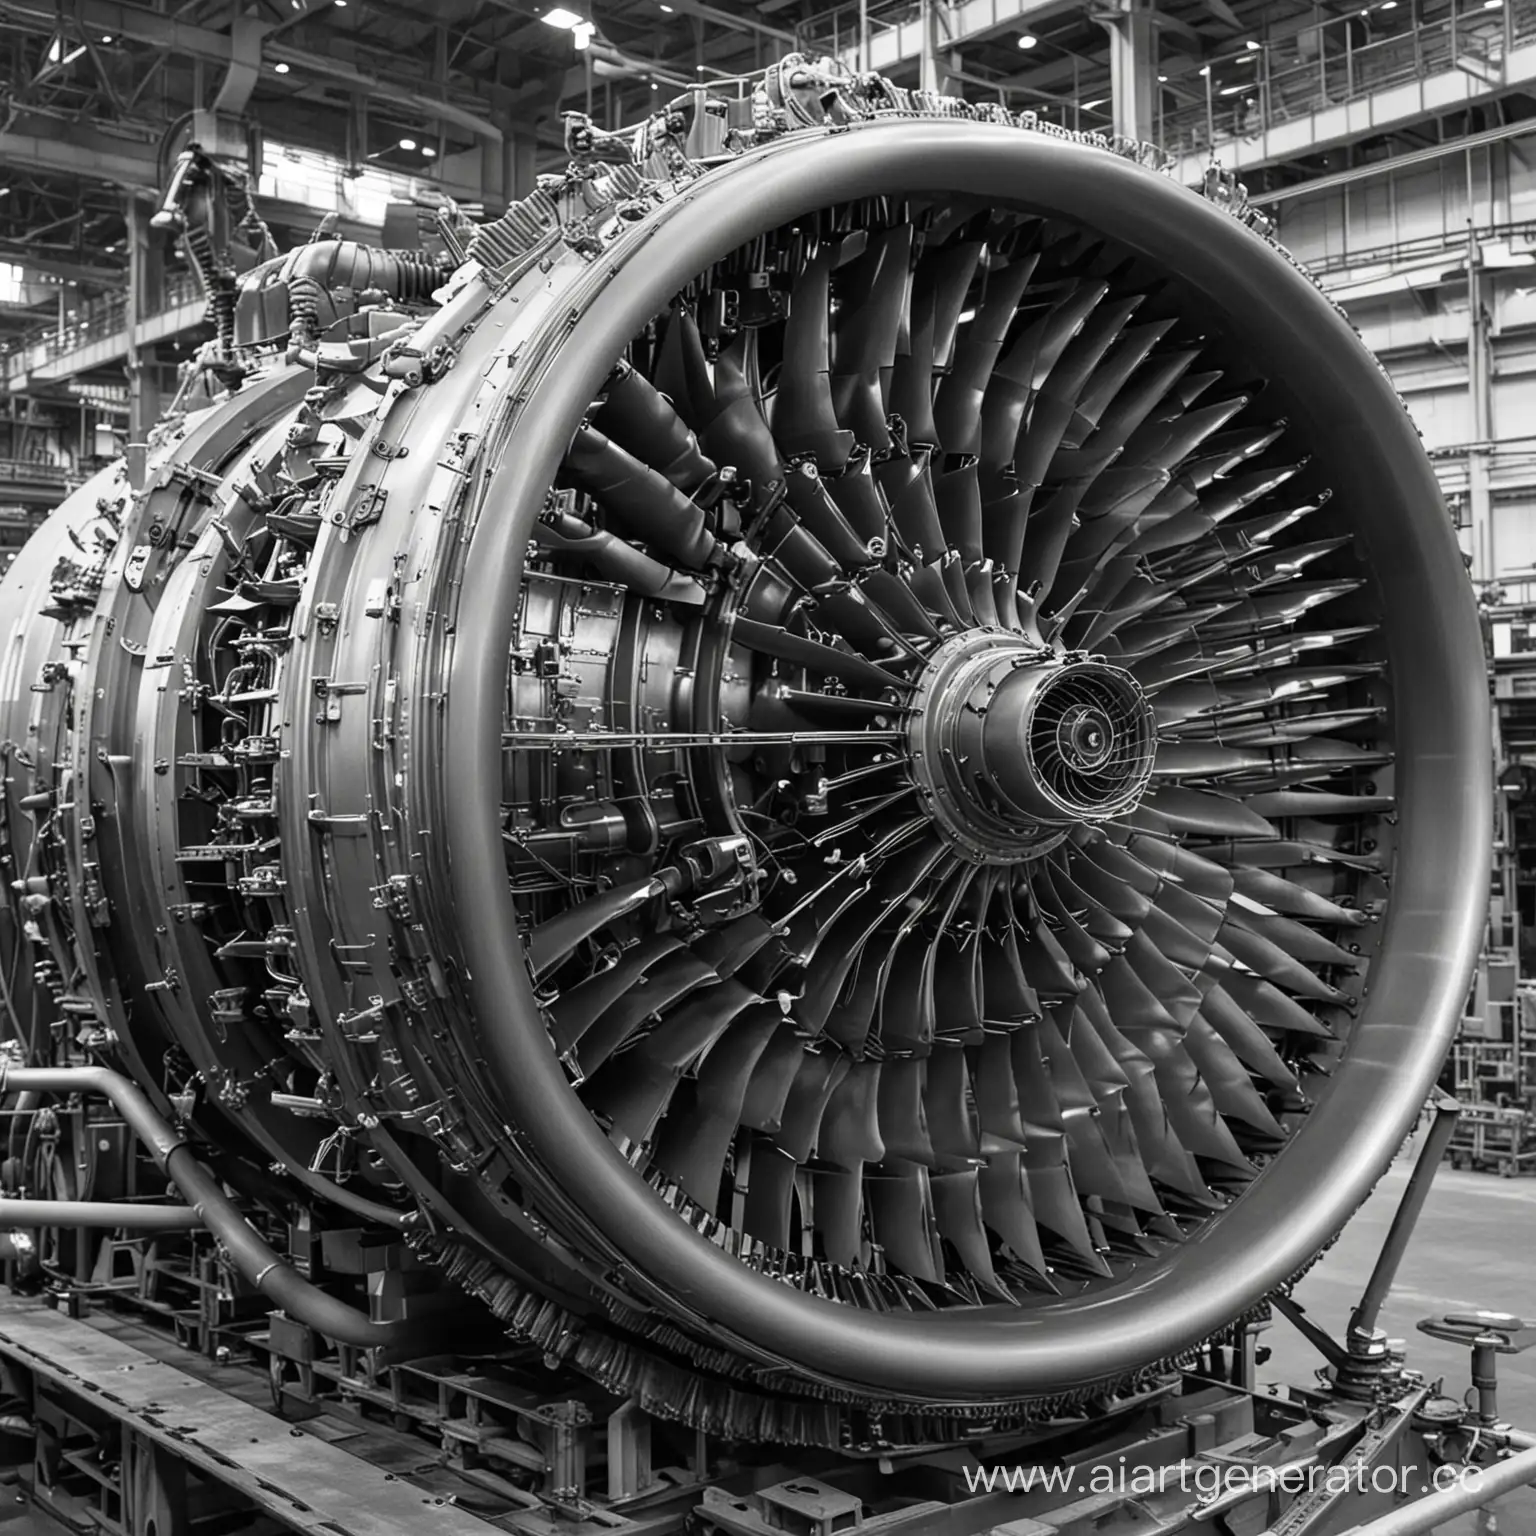 Industrial-Gas-Turbine-Engine-in-Operation